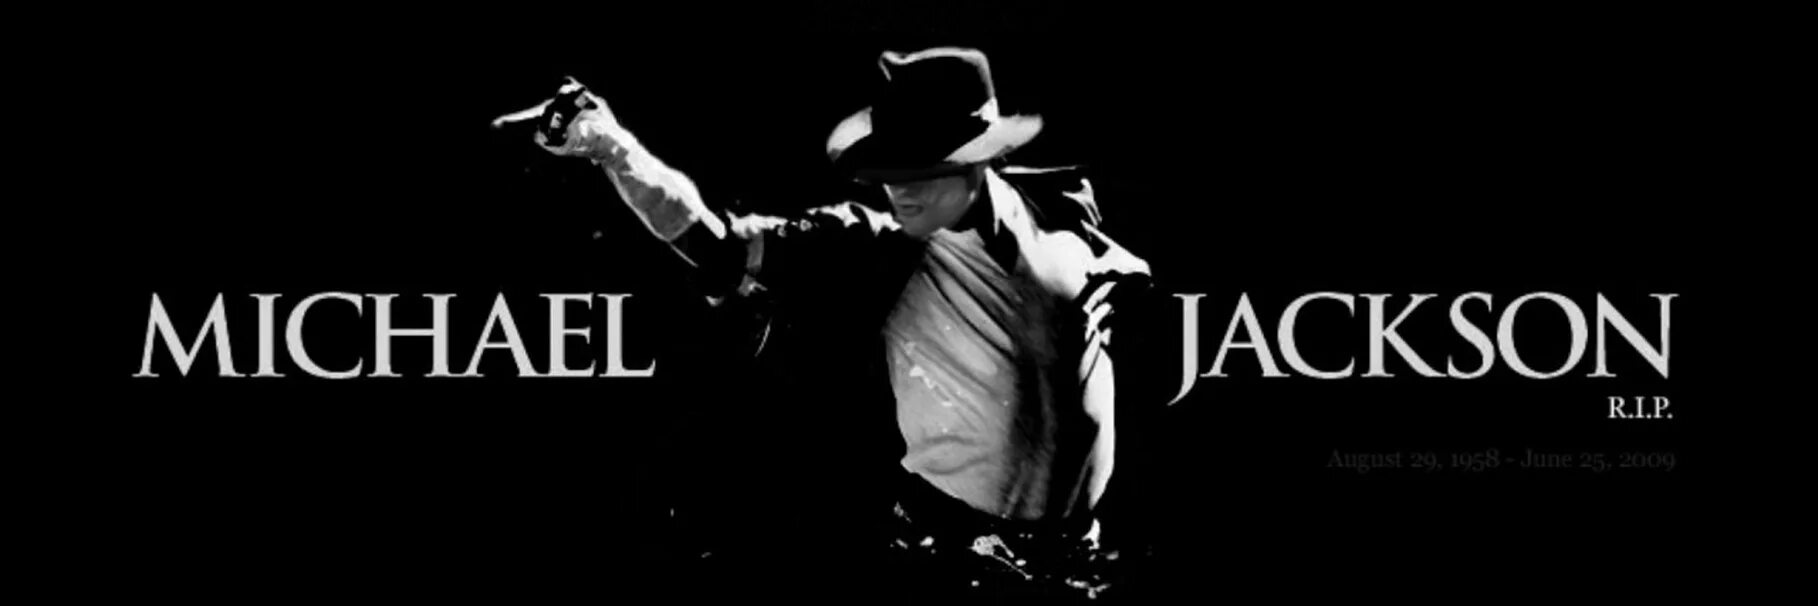 Michael Jackson Rip. Jackson Michael лейбл. Michael Jackson логотип.